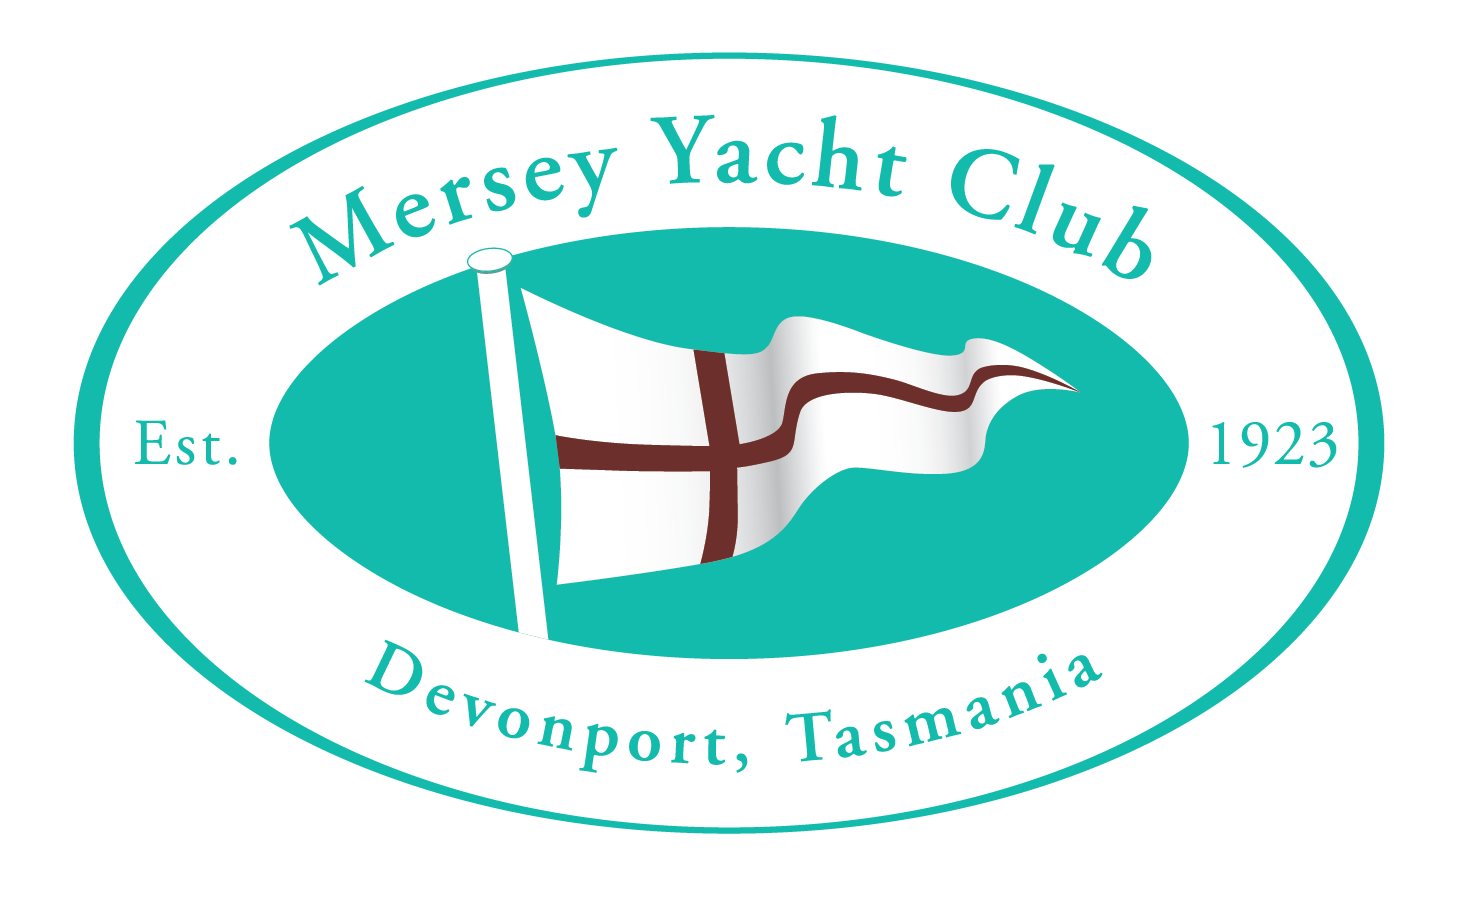 Mersey Yacht Club